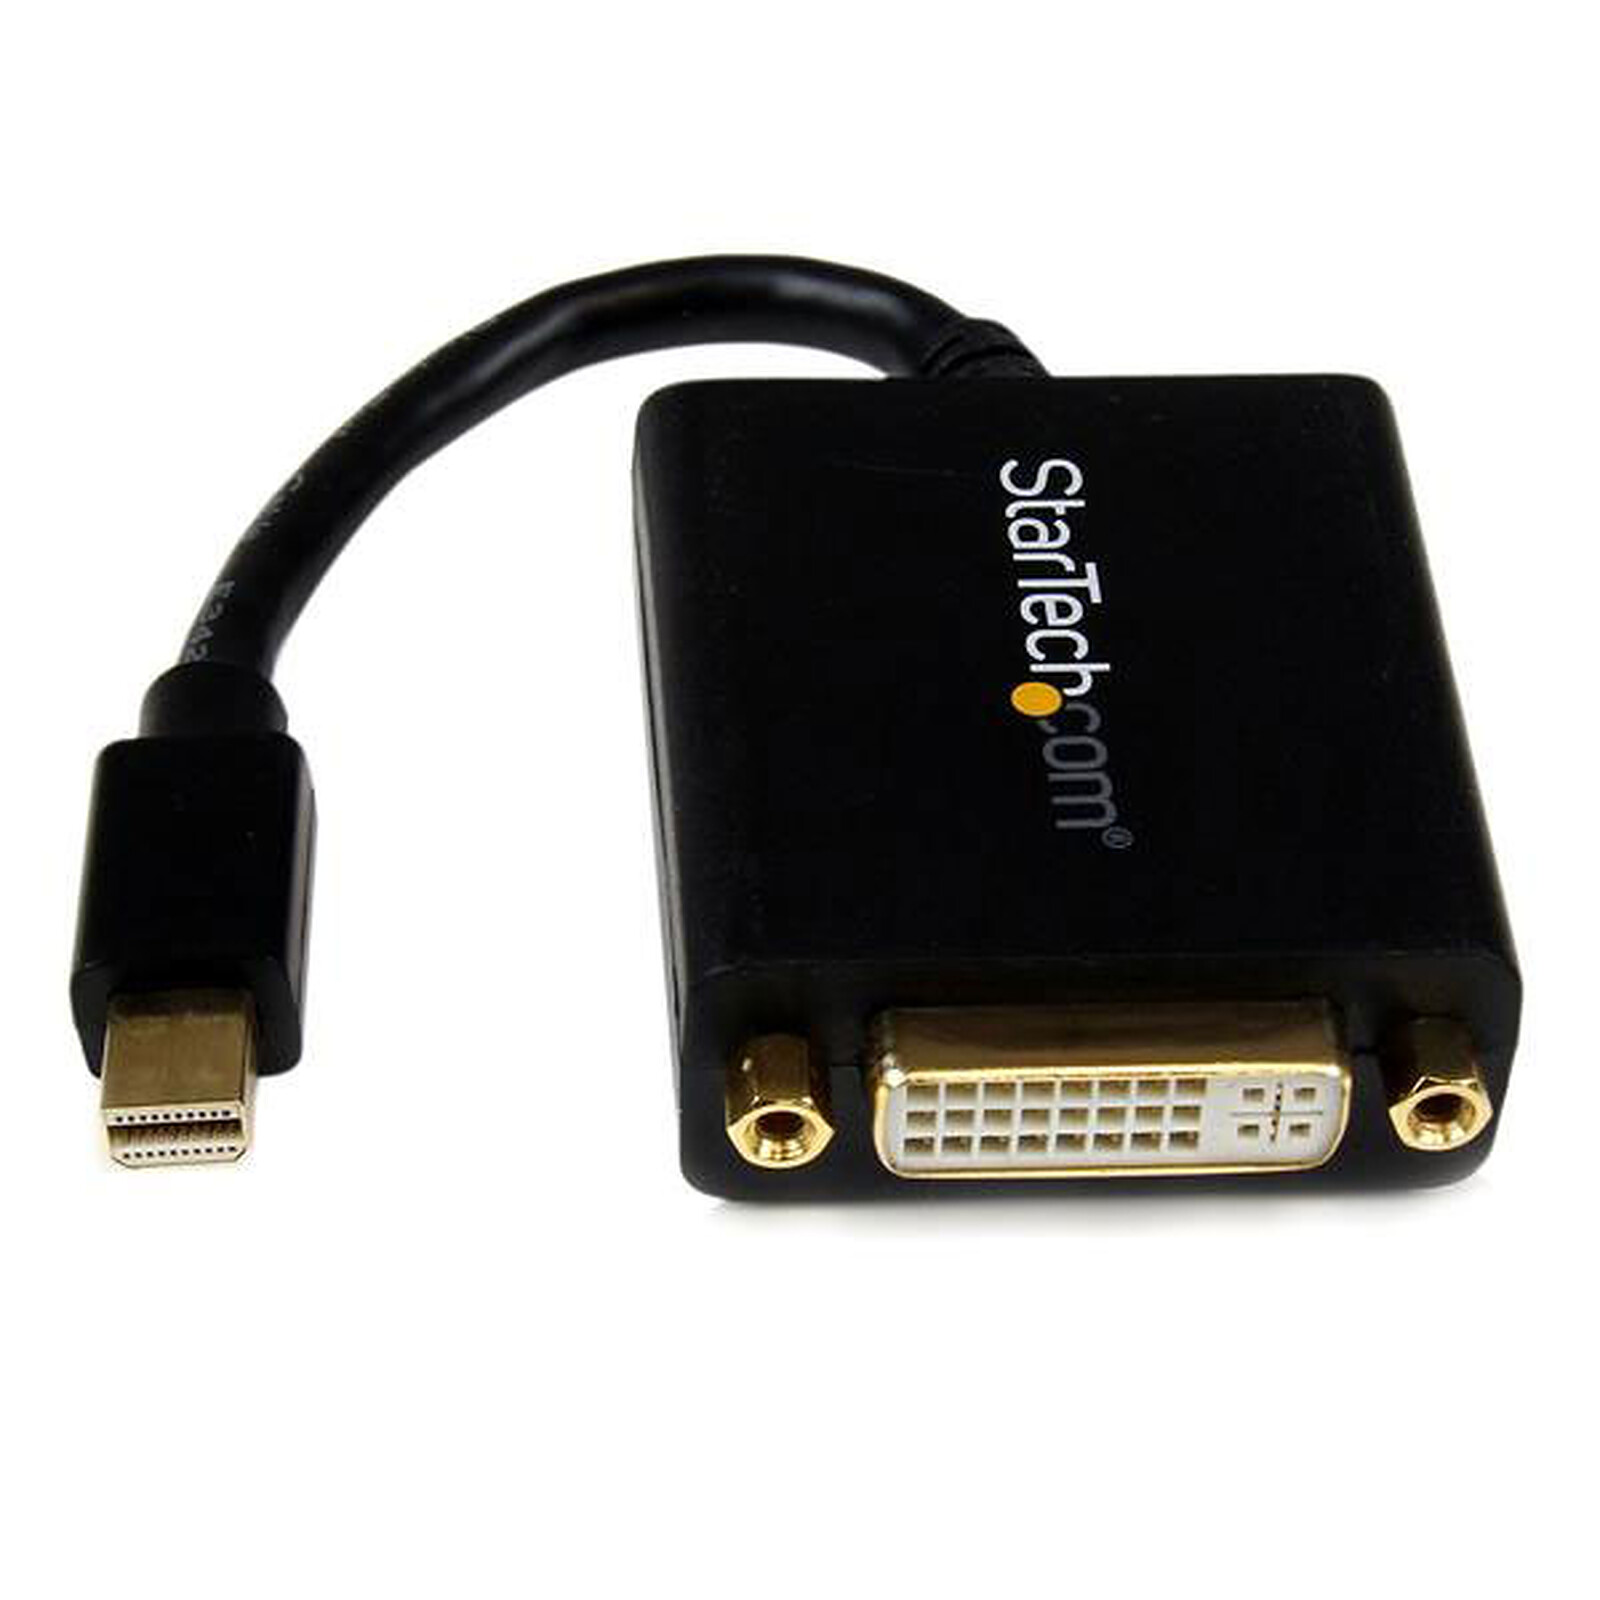 Adaptateur DVI-D Femelle / HDMI mâle - DVI - Garantie 3 ans LDLC